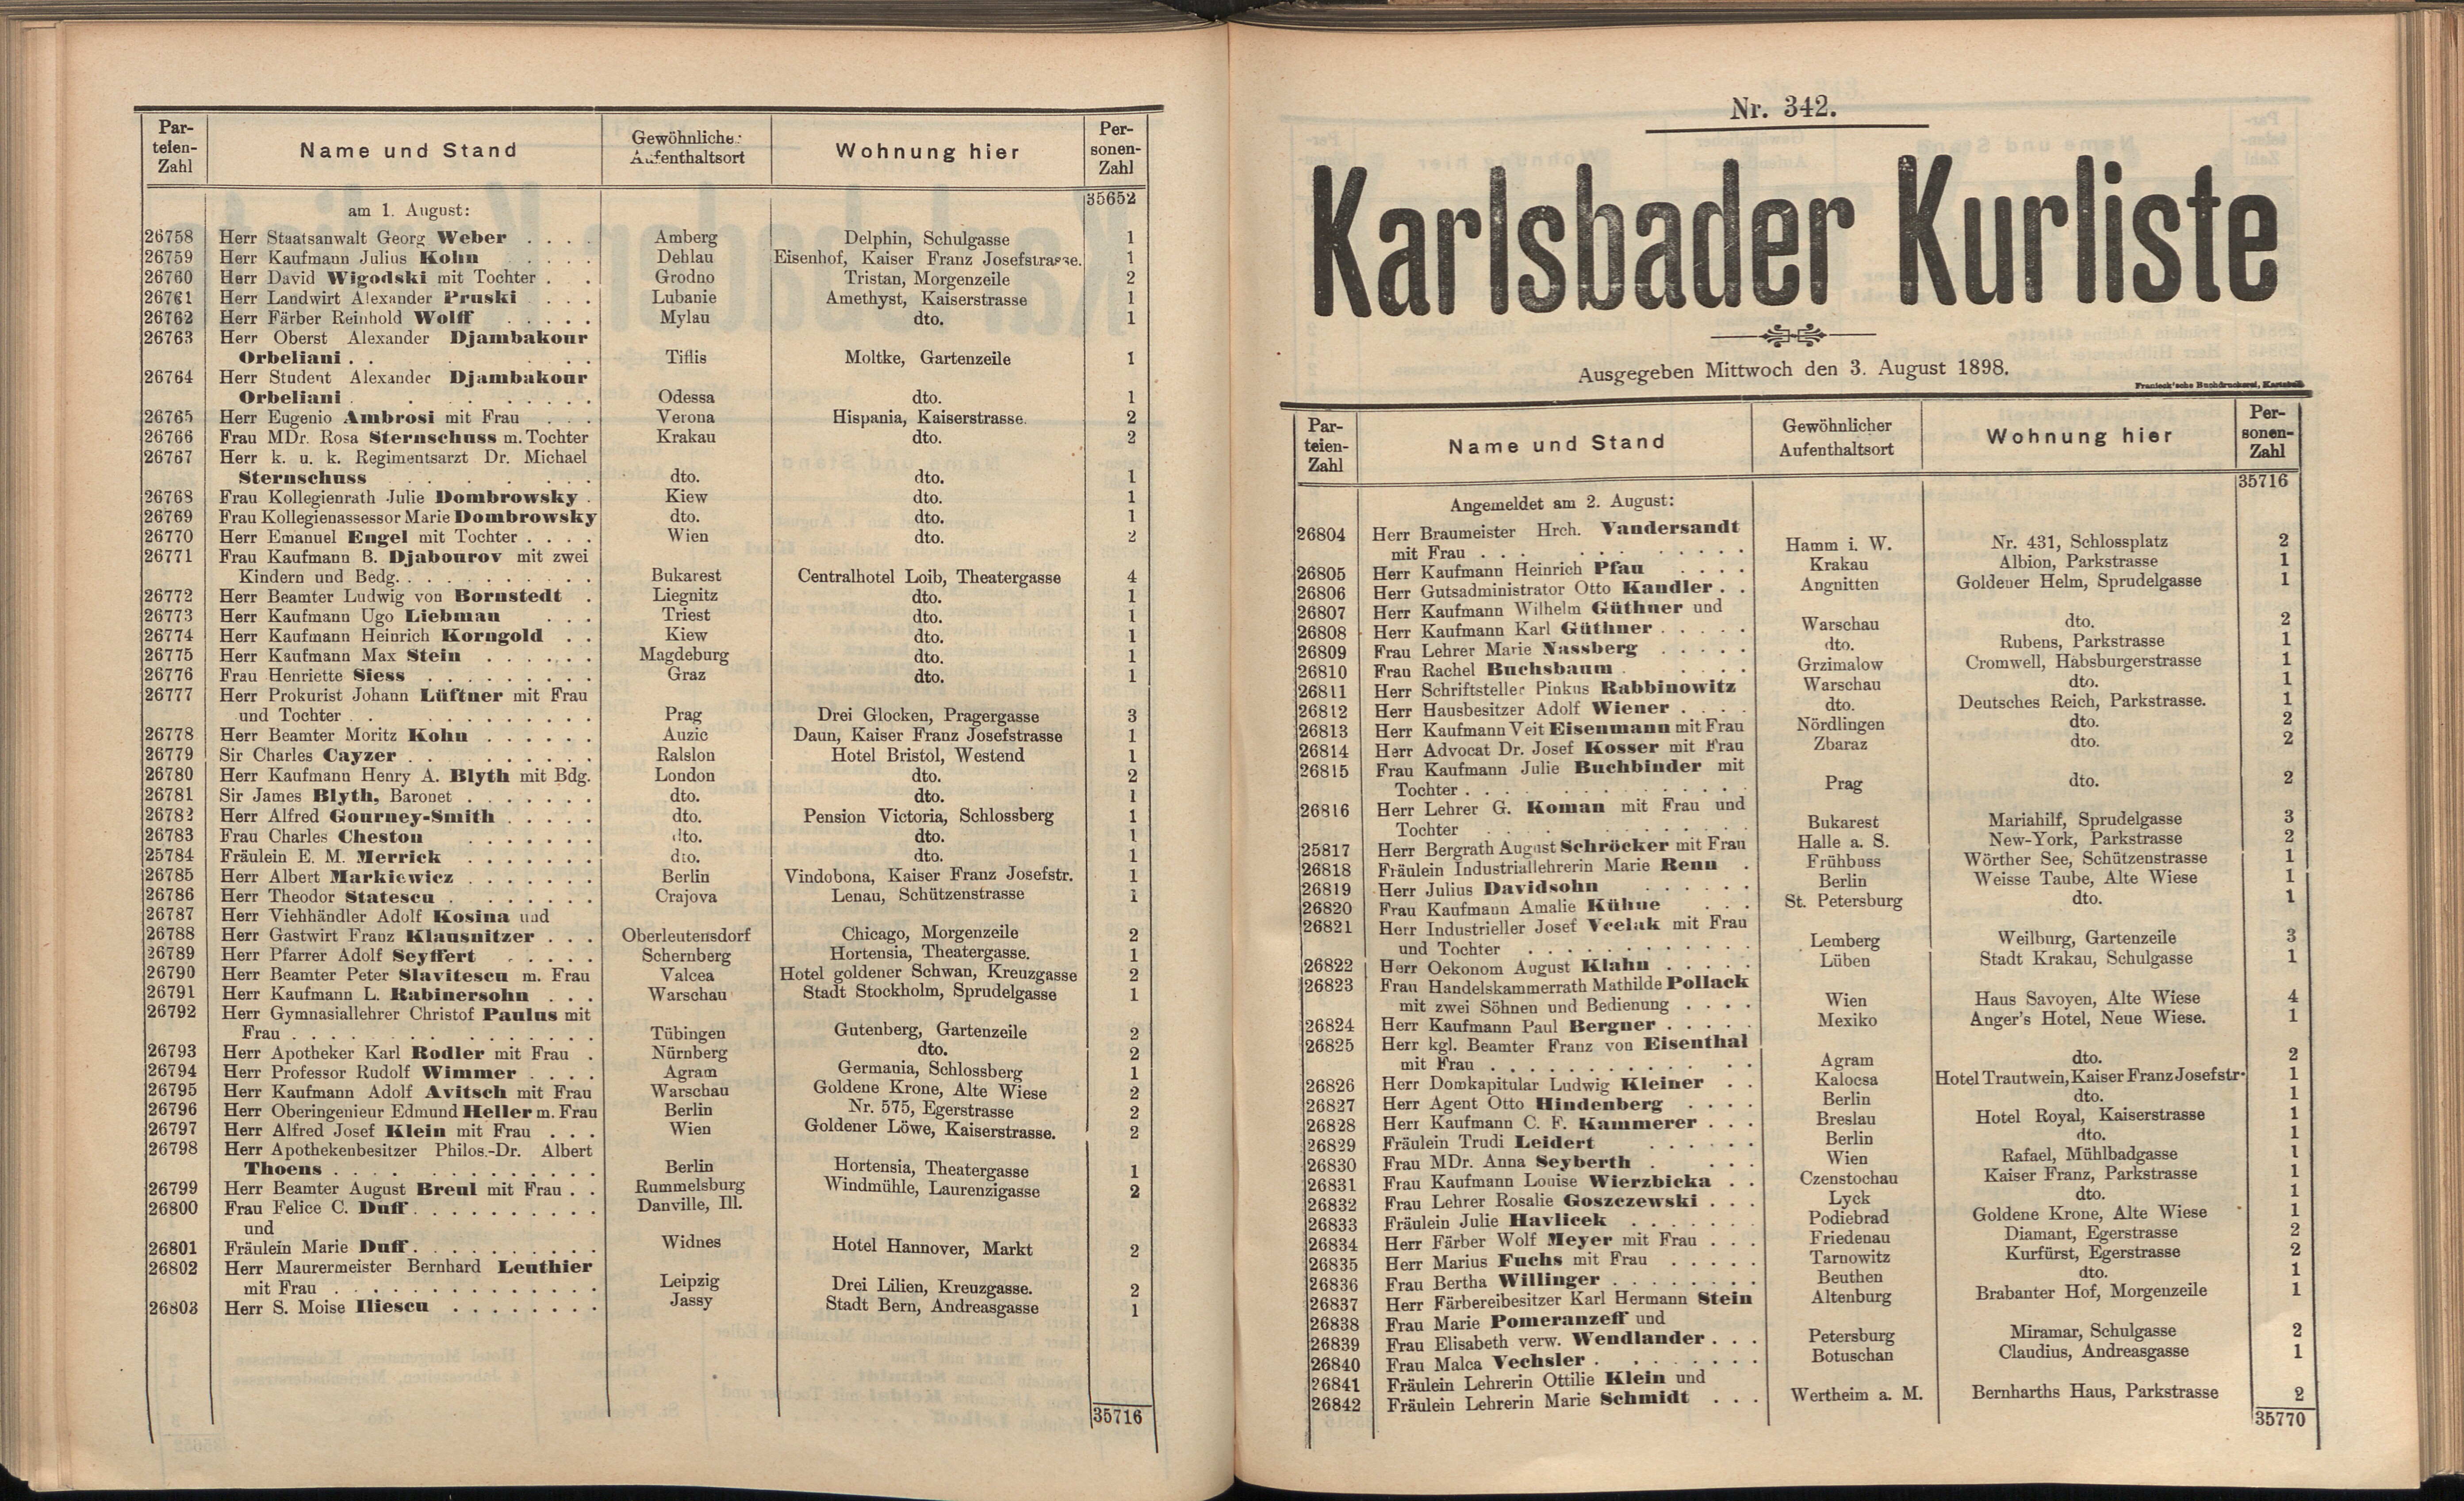 358. soap-kv_knihovna_karlsbader-kurliste-1898_3590